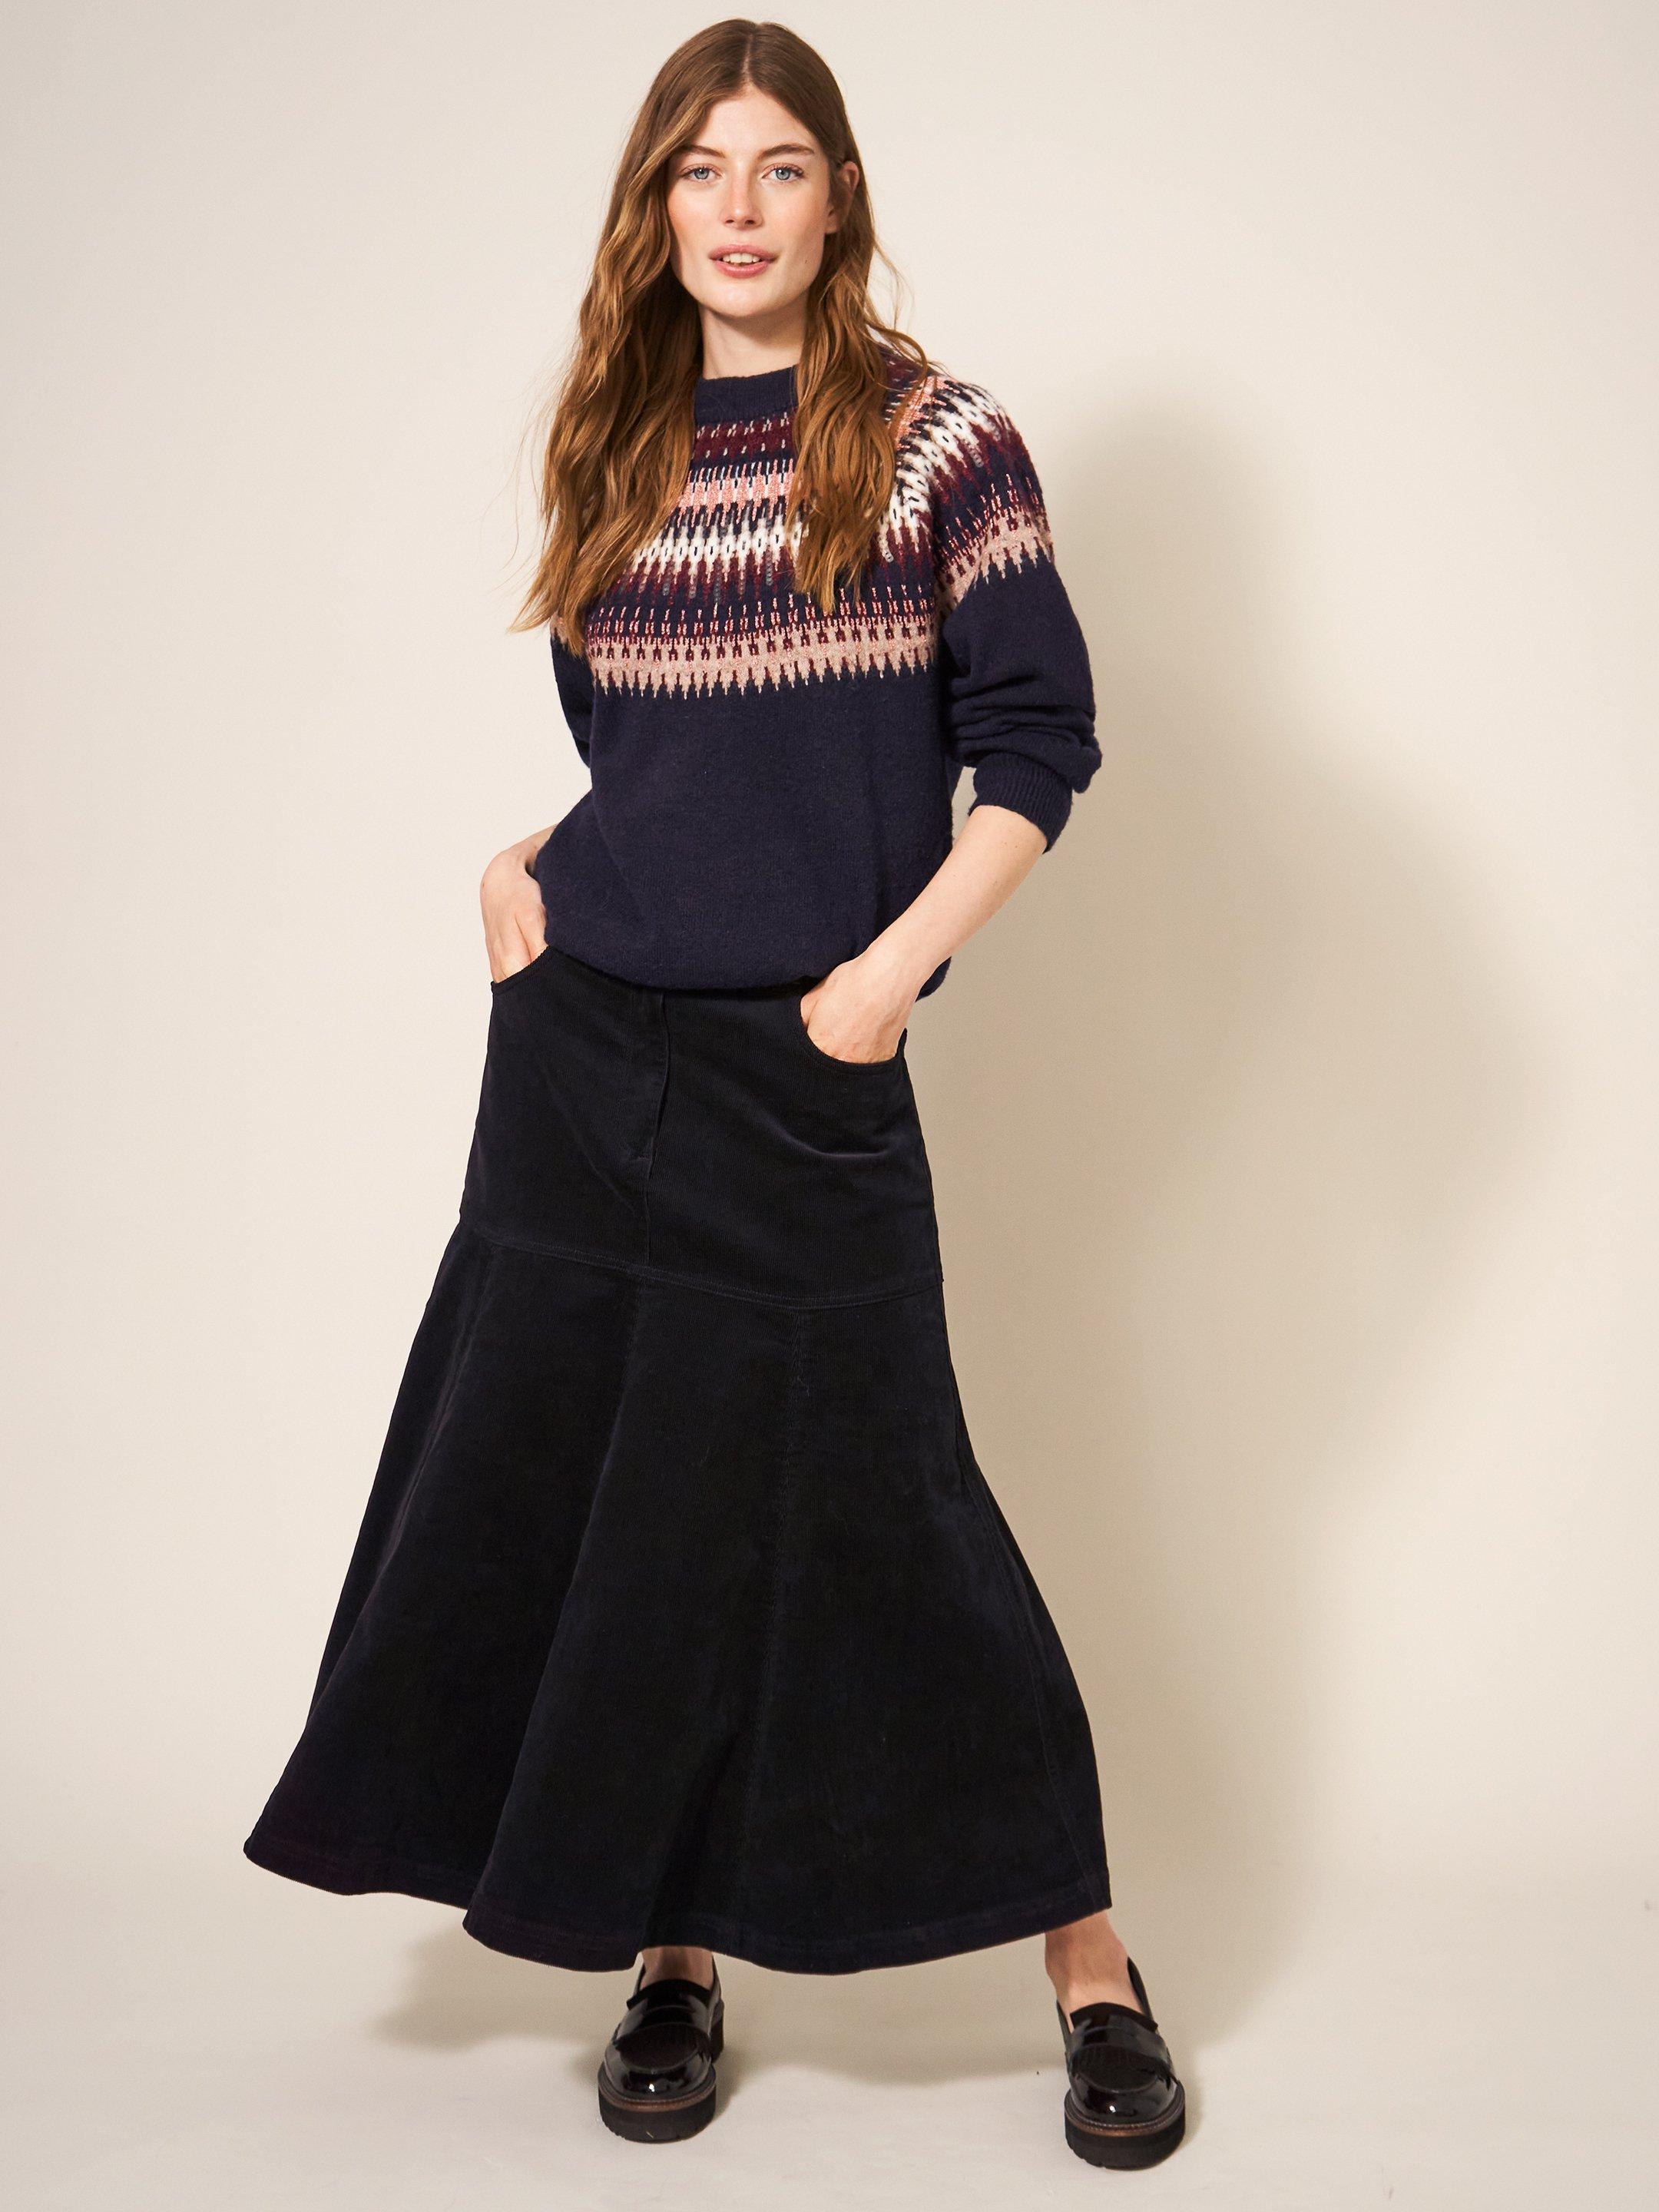 Quinn Organic Cord Skirt in PURE BLK - MODEL DETAIL